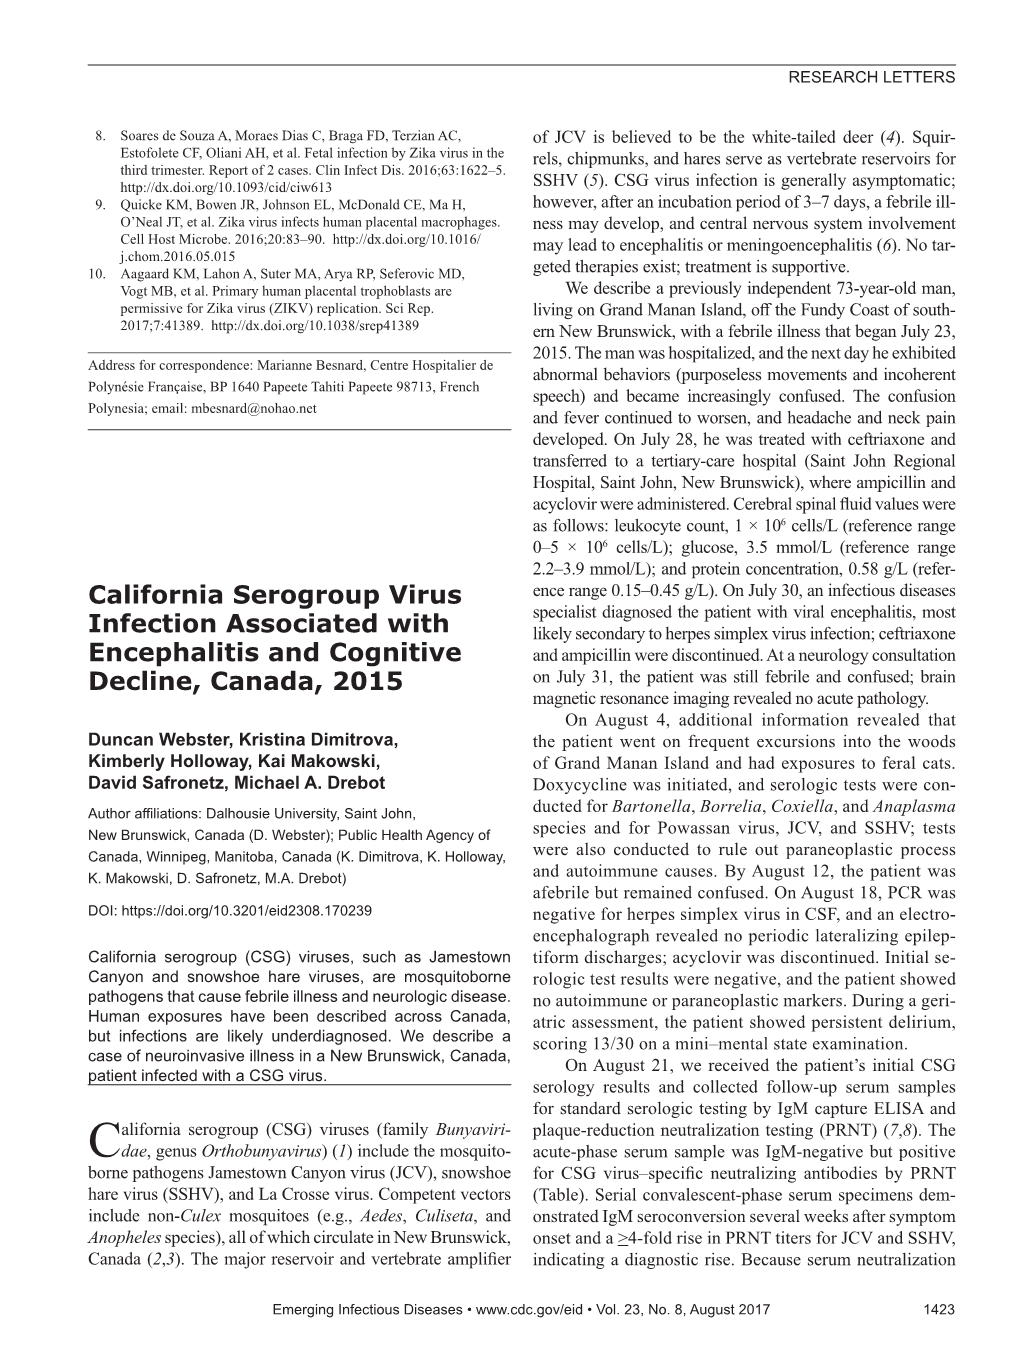 California Serogroup Virus Infection Associated with Encephalitis and Cognitive Decline, Canada, 2015*